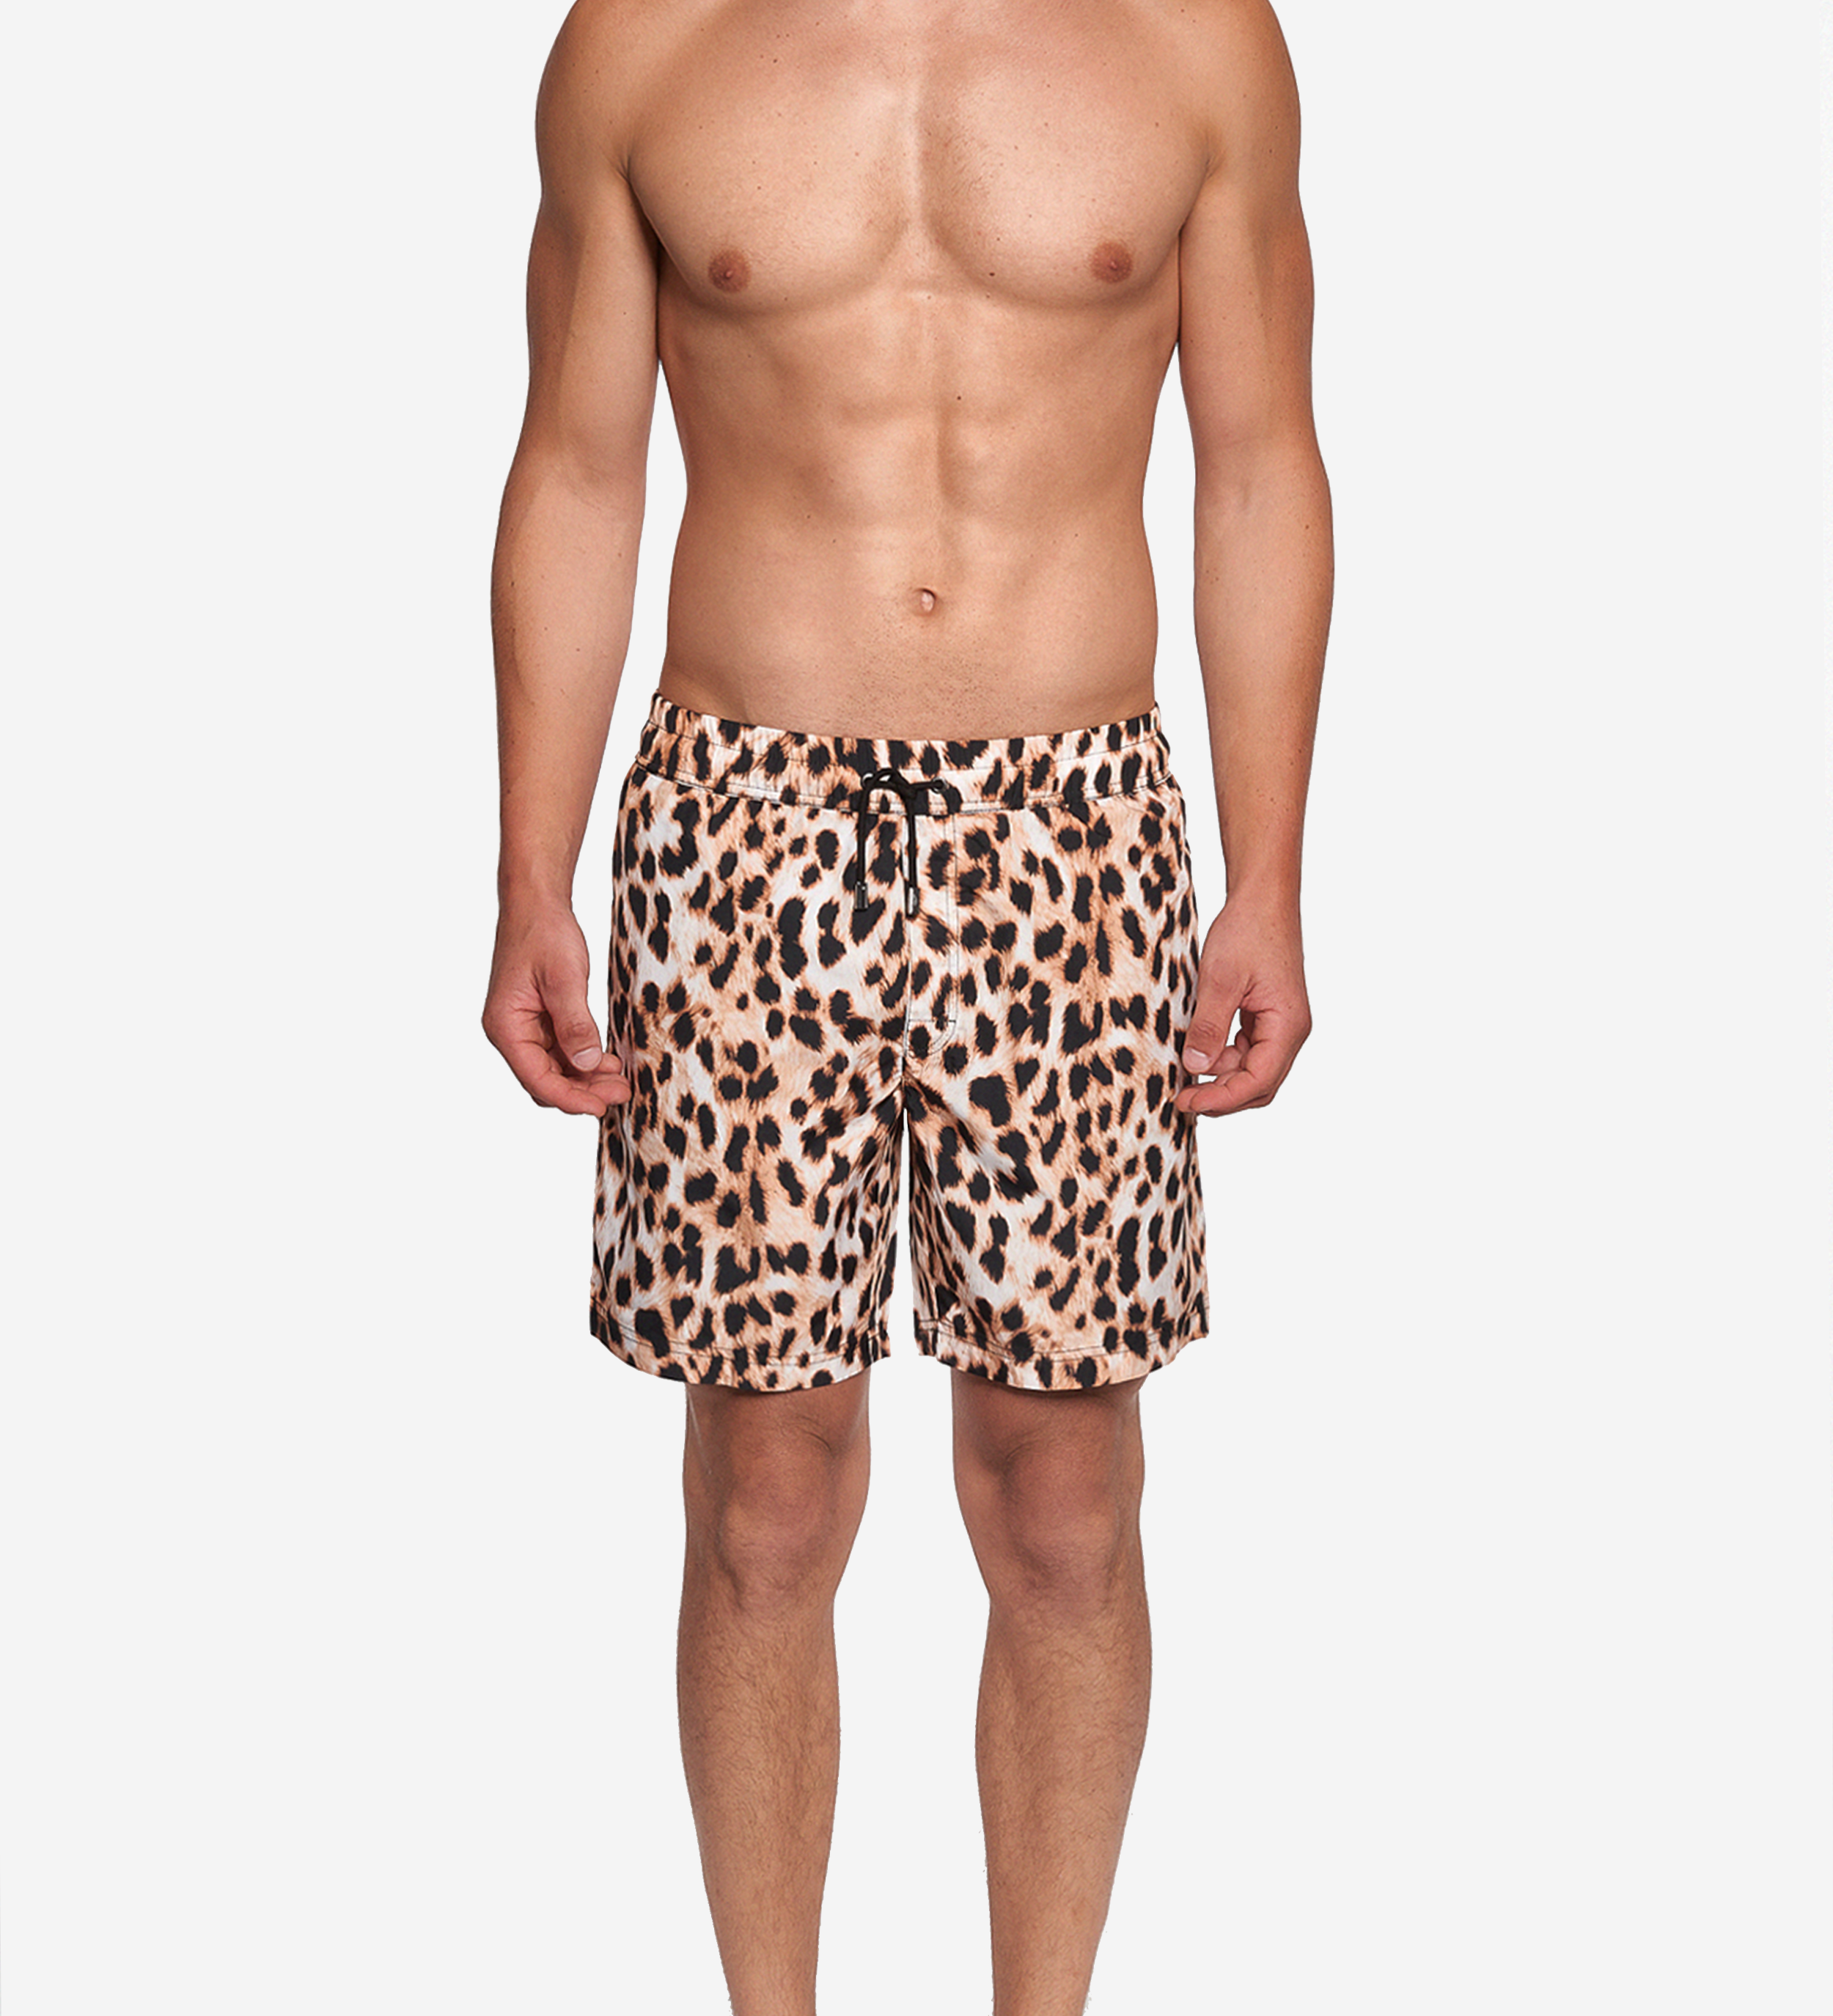 Model wearing leopard printed extended-length swim trunks